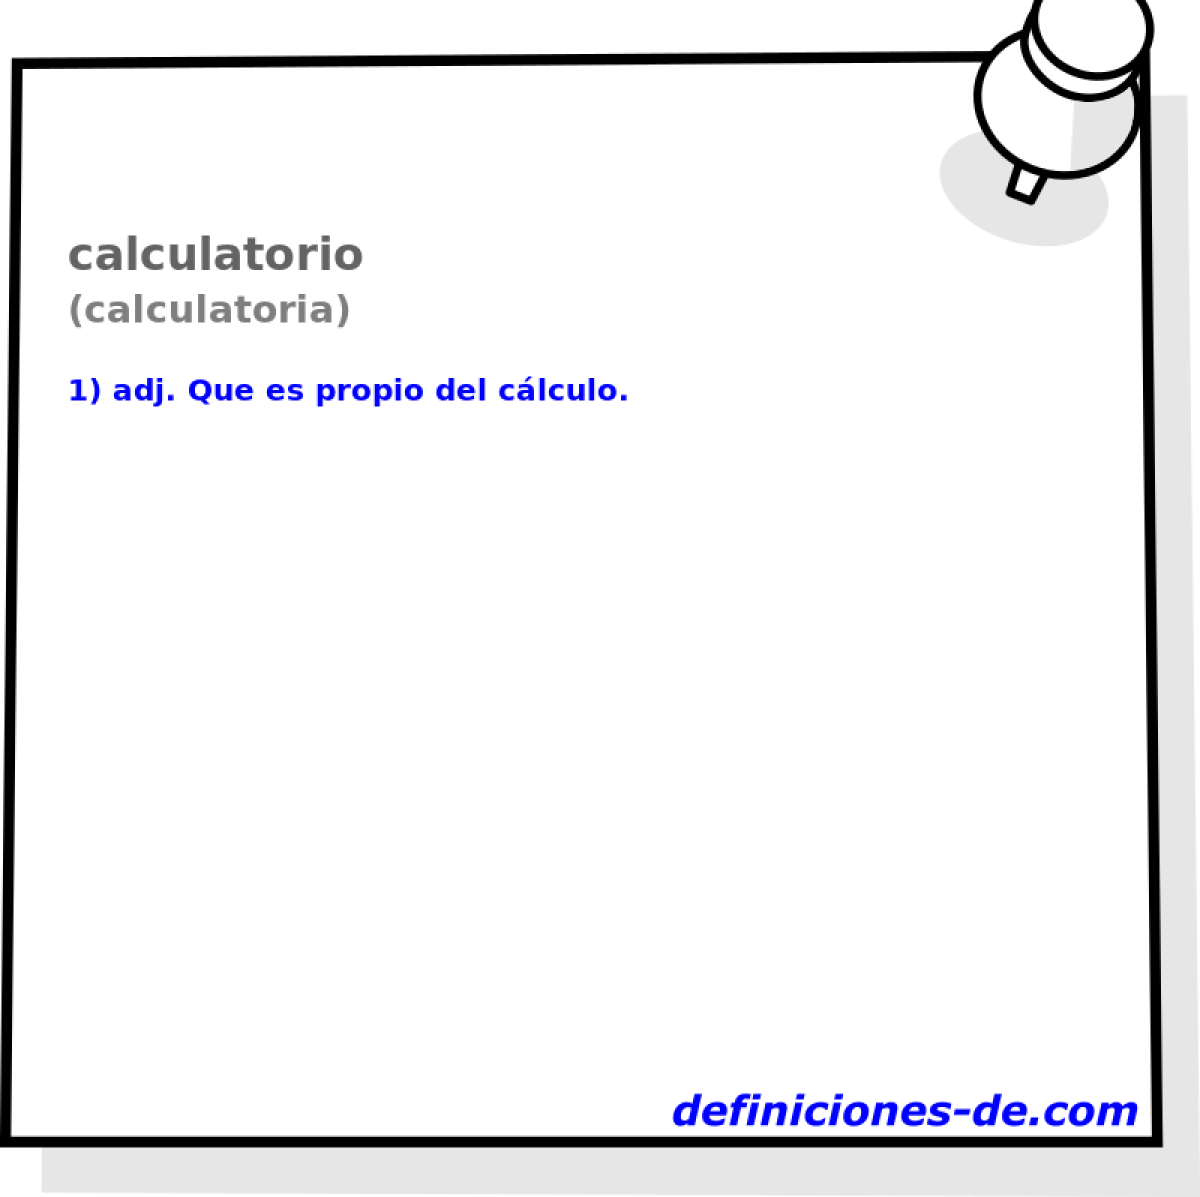 calculatorio (calculatoria)